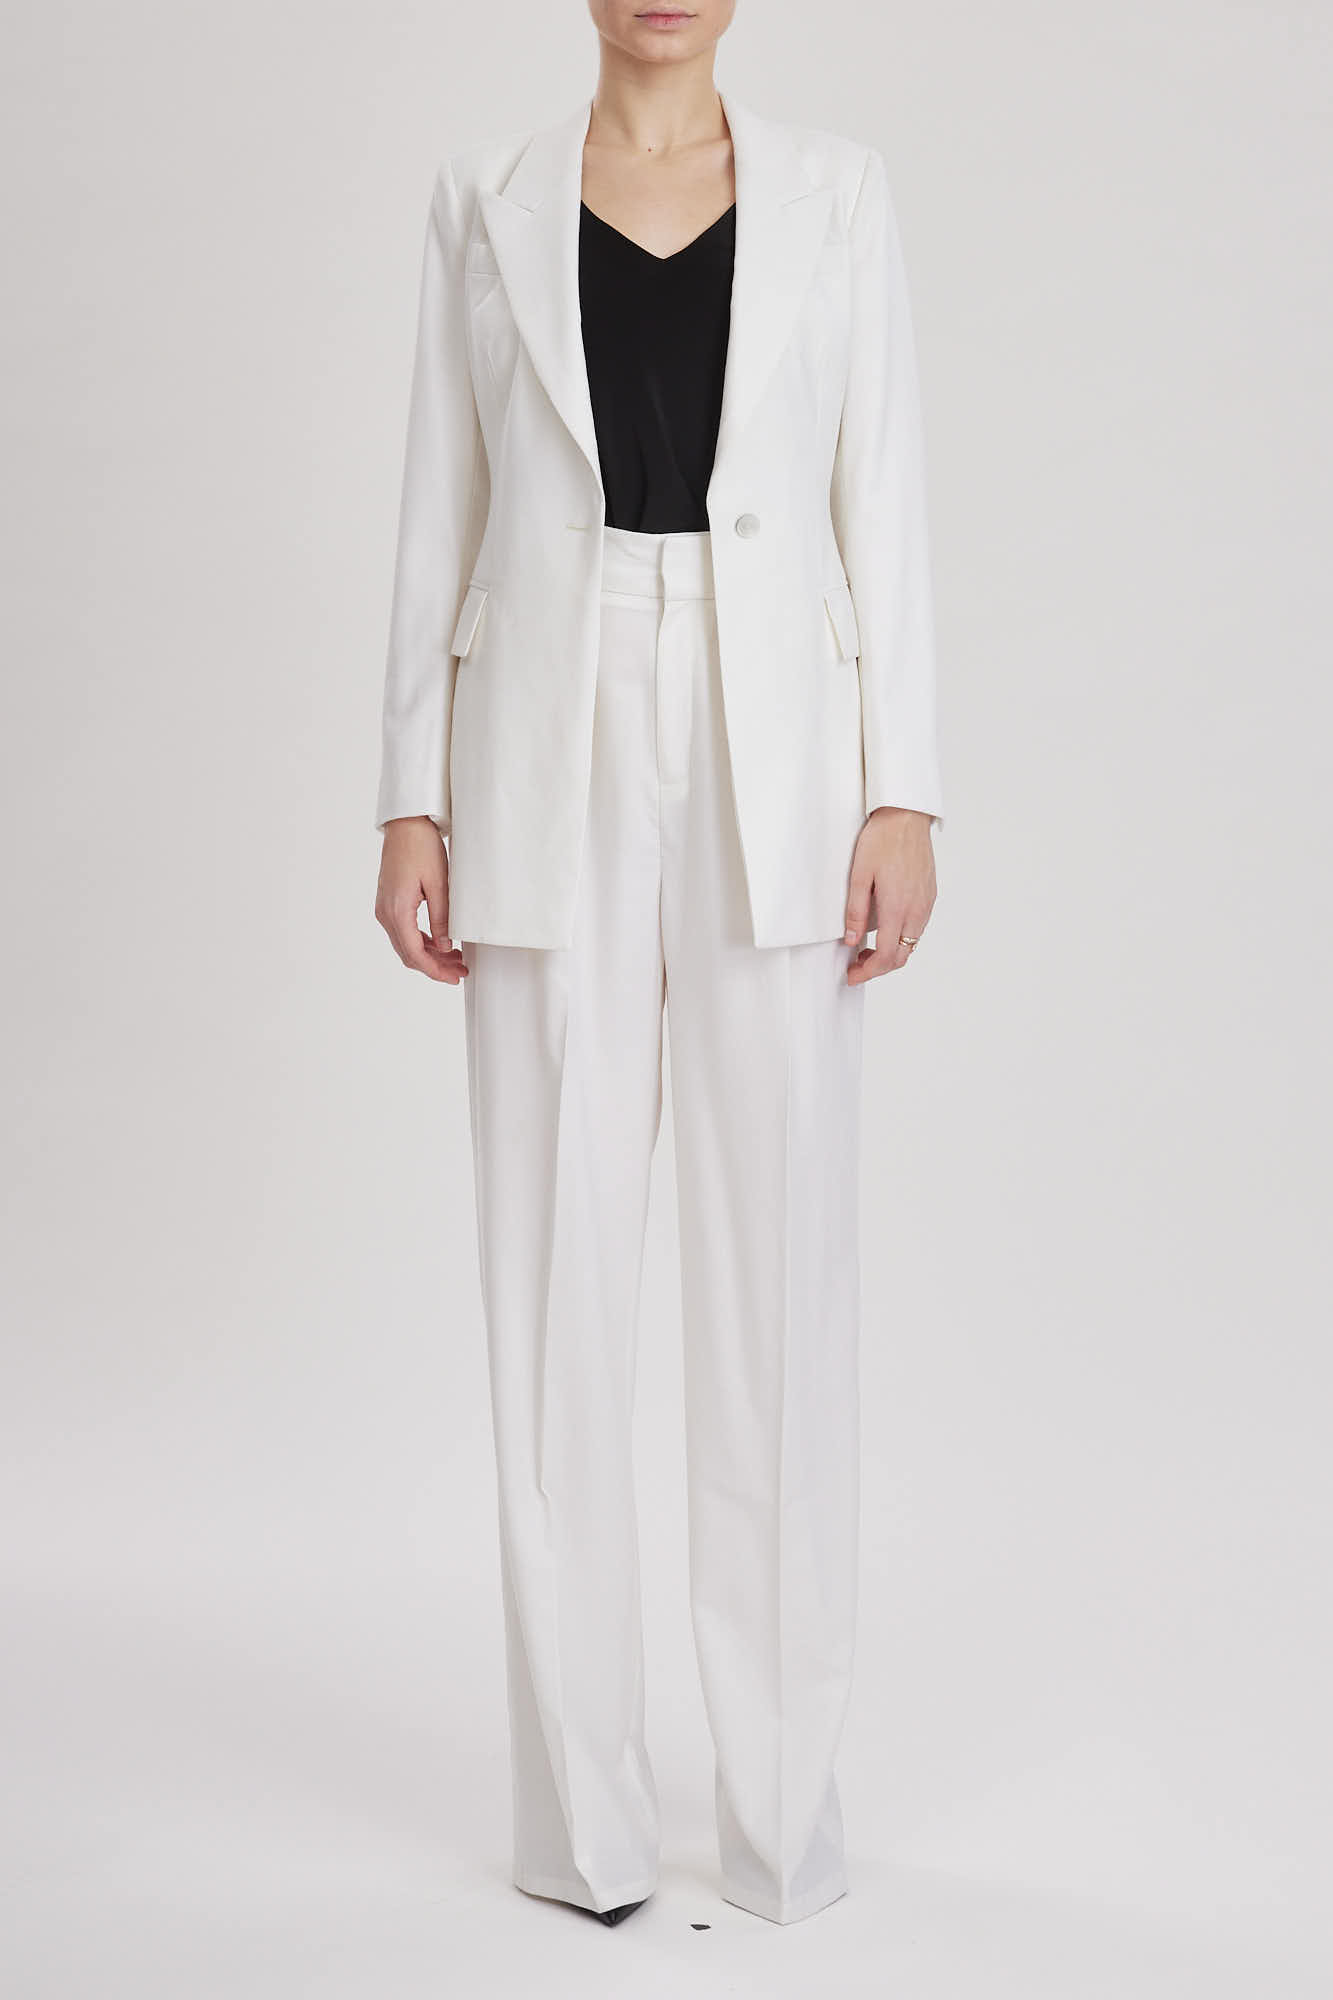 Almeria Trouser – High-waisted slim cigarette trousers in white wool